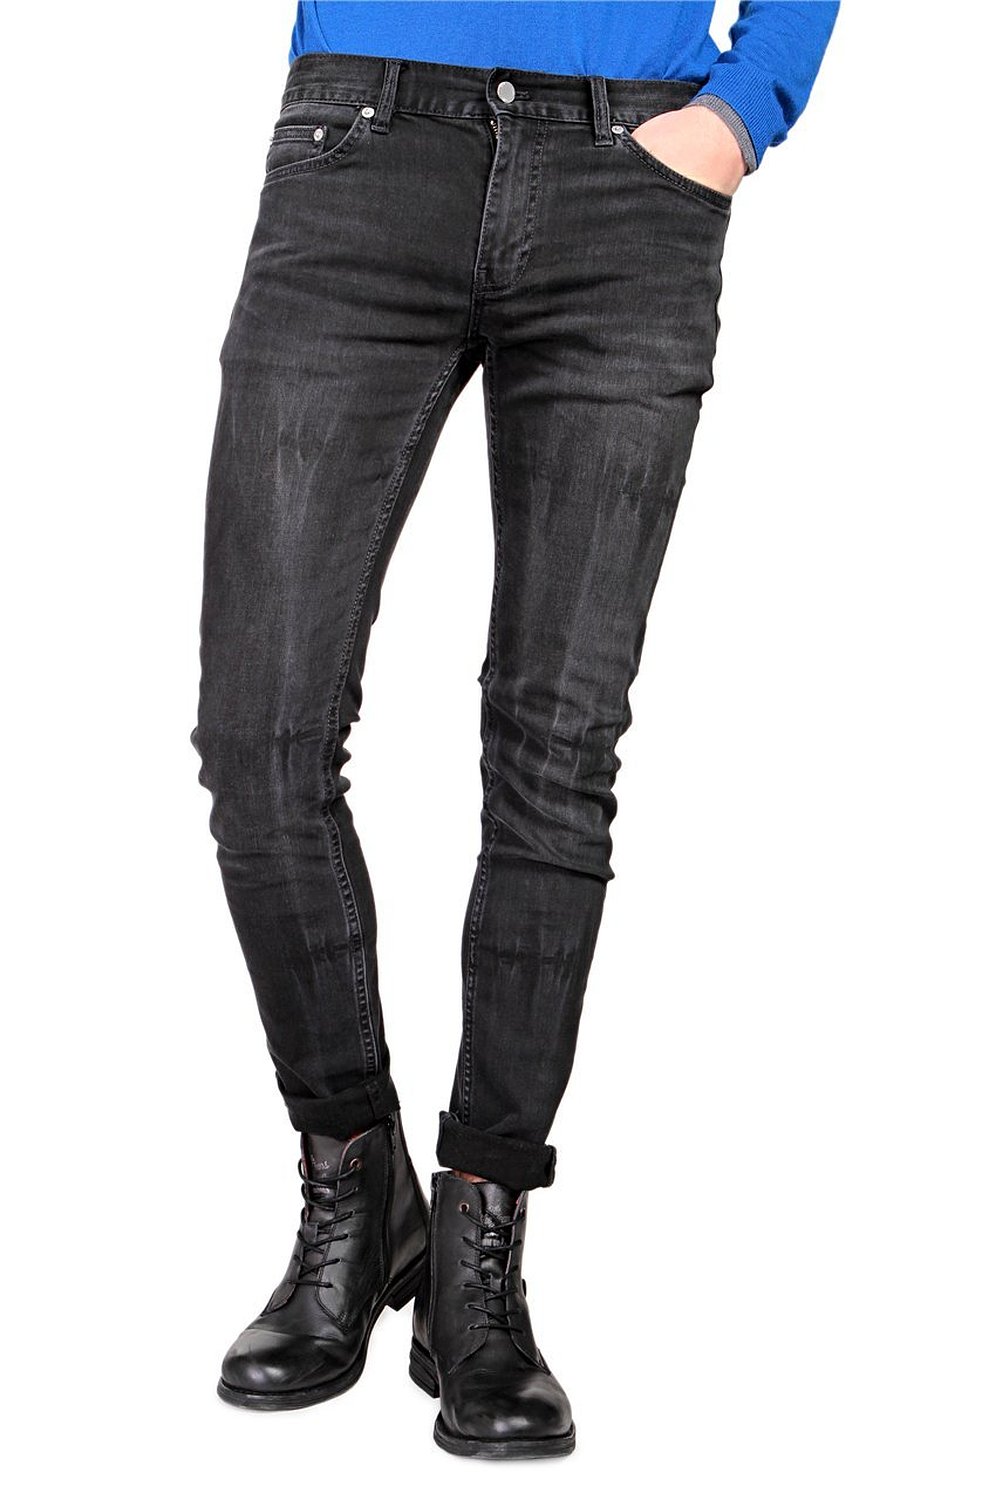 Blk Dnm 'Jeans 25' Slim Skinny Leg Jeans (Solid Black)